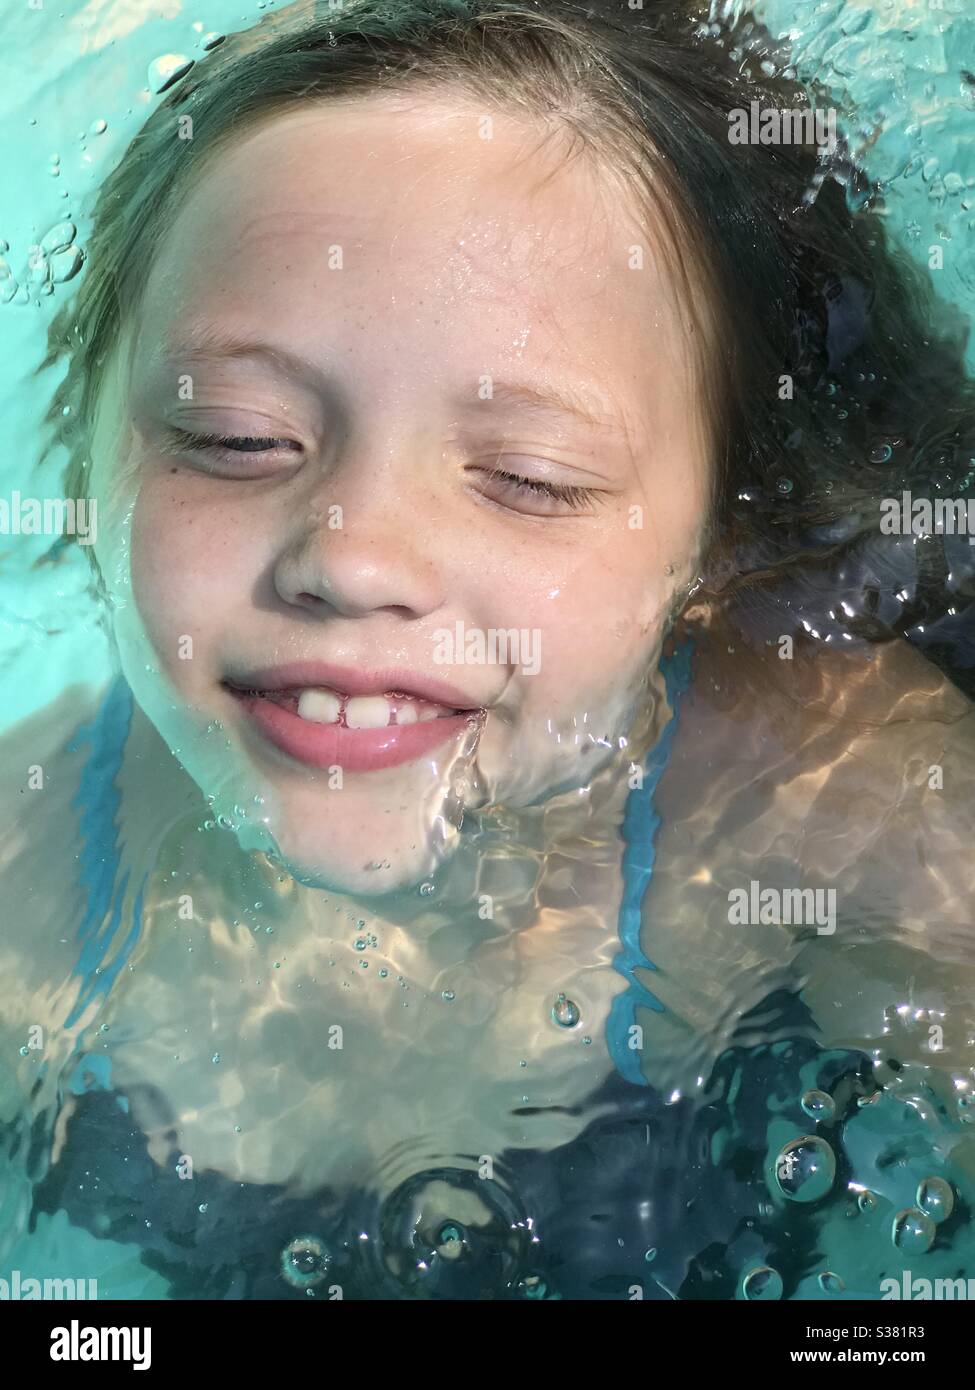 La cara de la niña se pegaba del agua, sonriendo en la piscina. Parece relajado Foto de stock